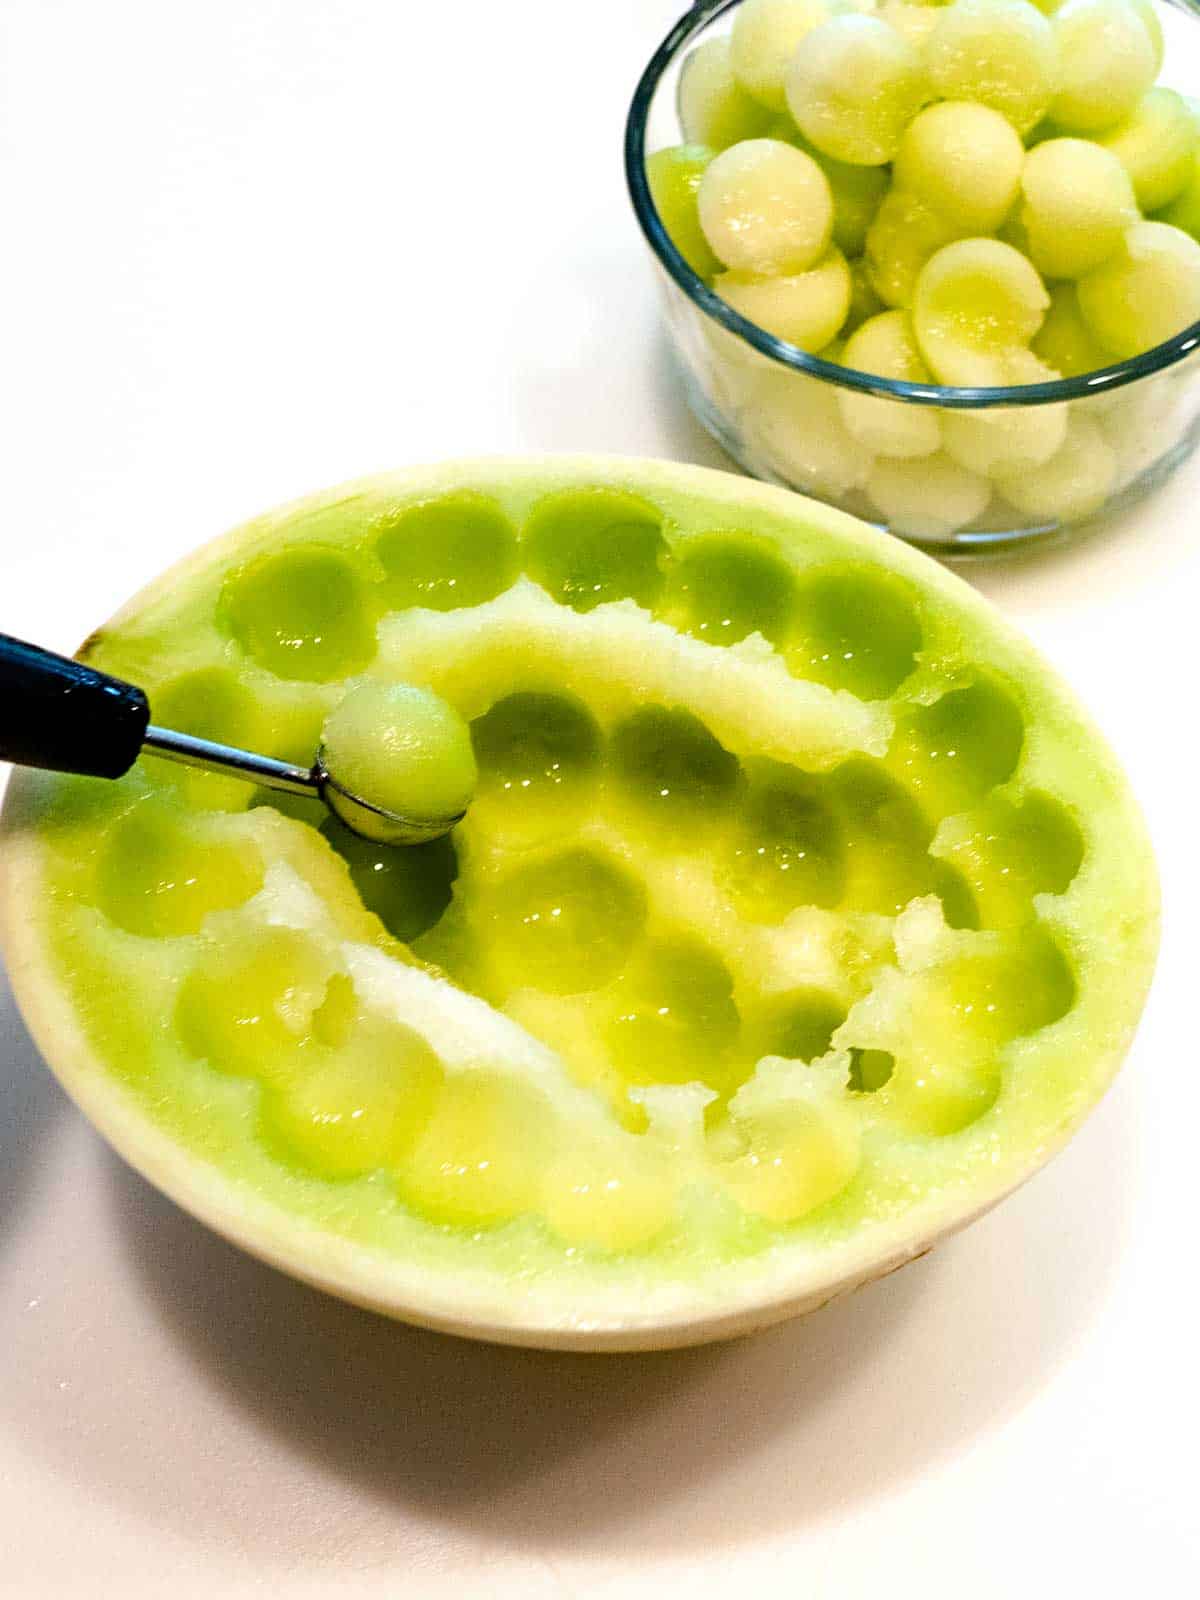 Scooping balls of honeydew melon.